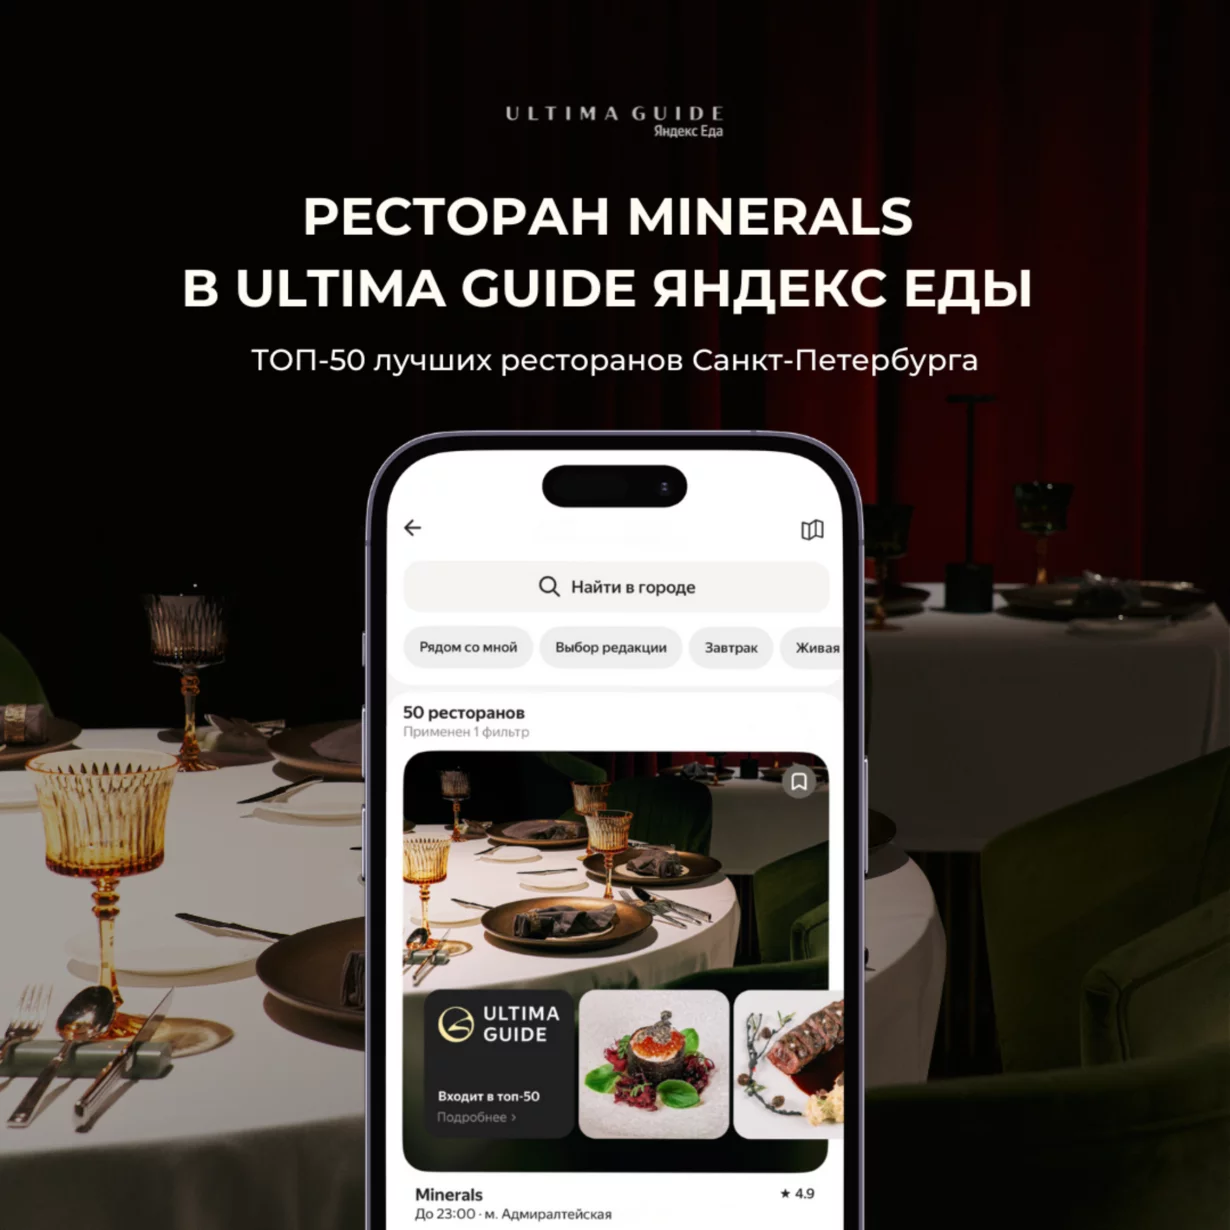 Ресторан Minerals вошел в Ultima Guide Яндекс Еды